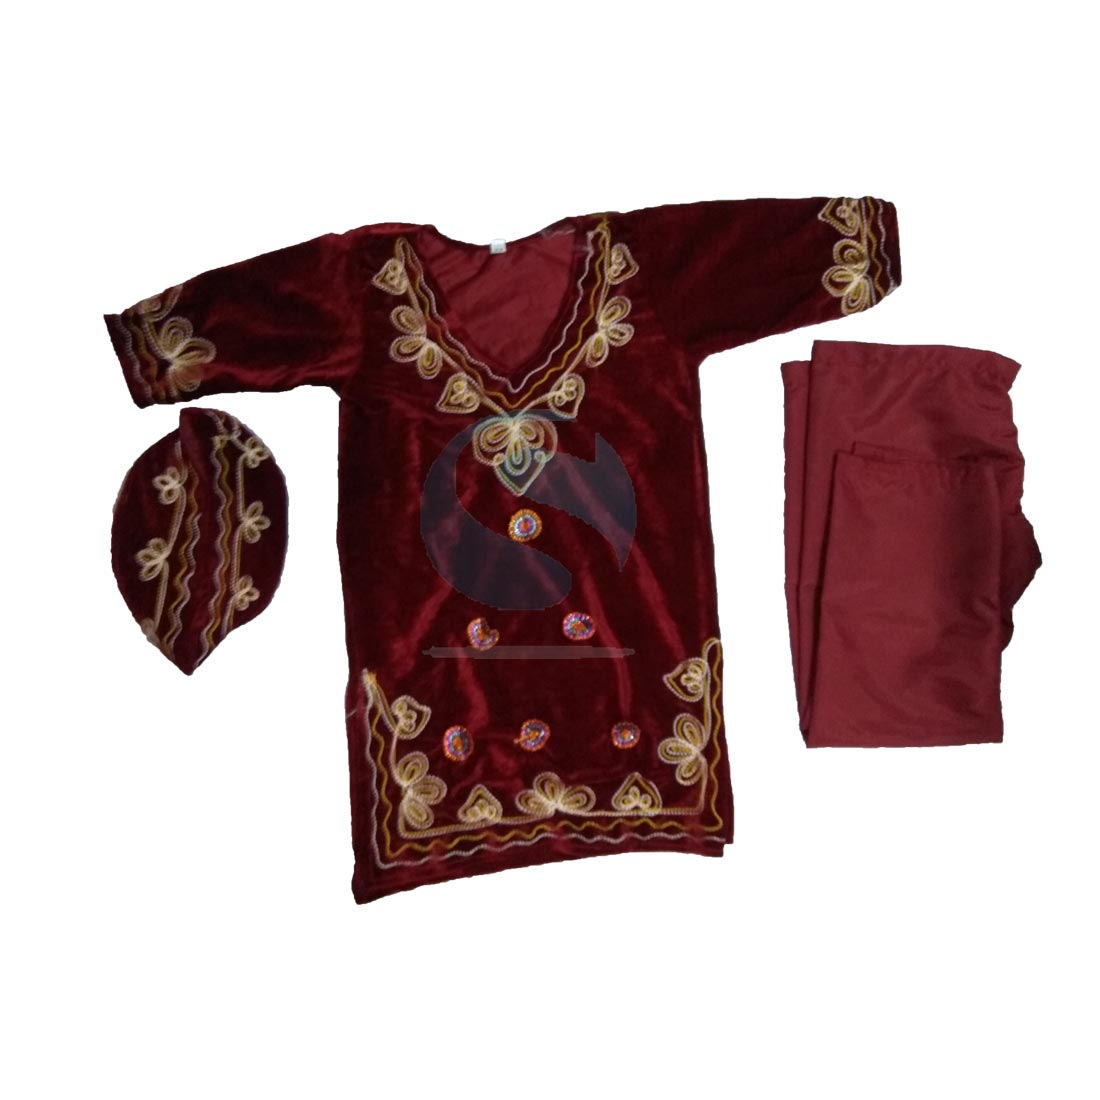 Dress of Kashmir | Traditional dress of Kashmir | Get all details..